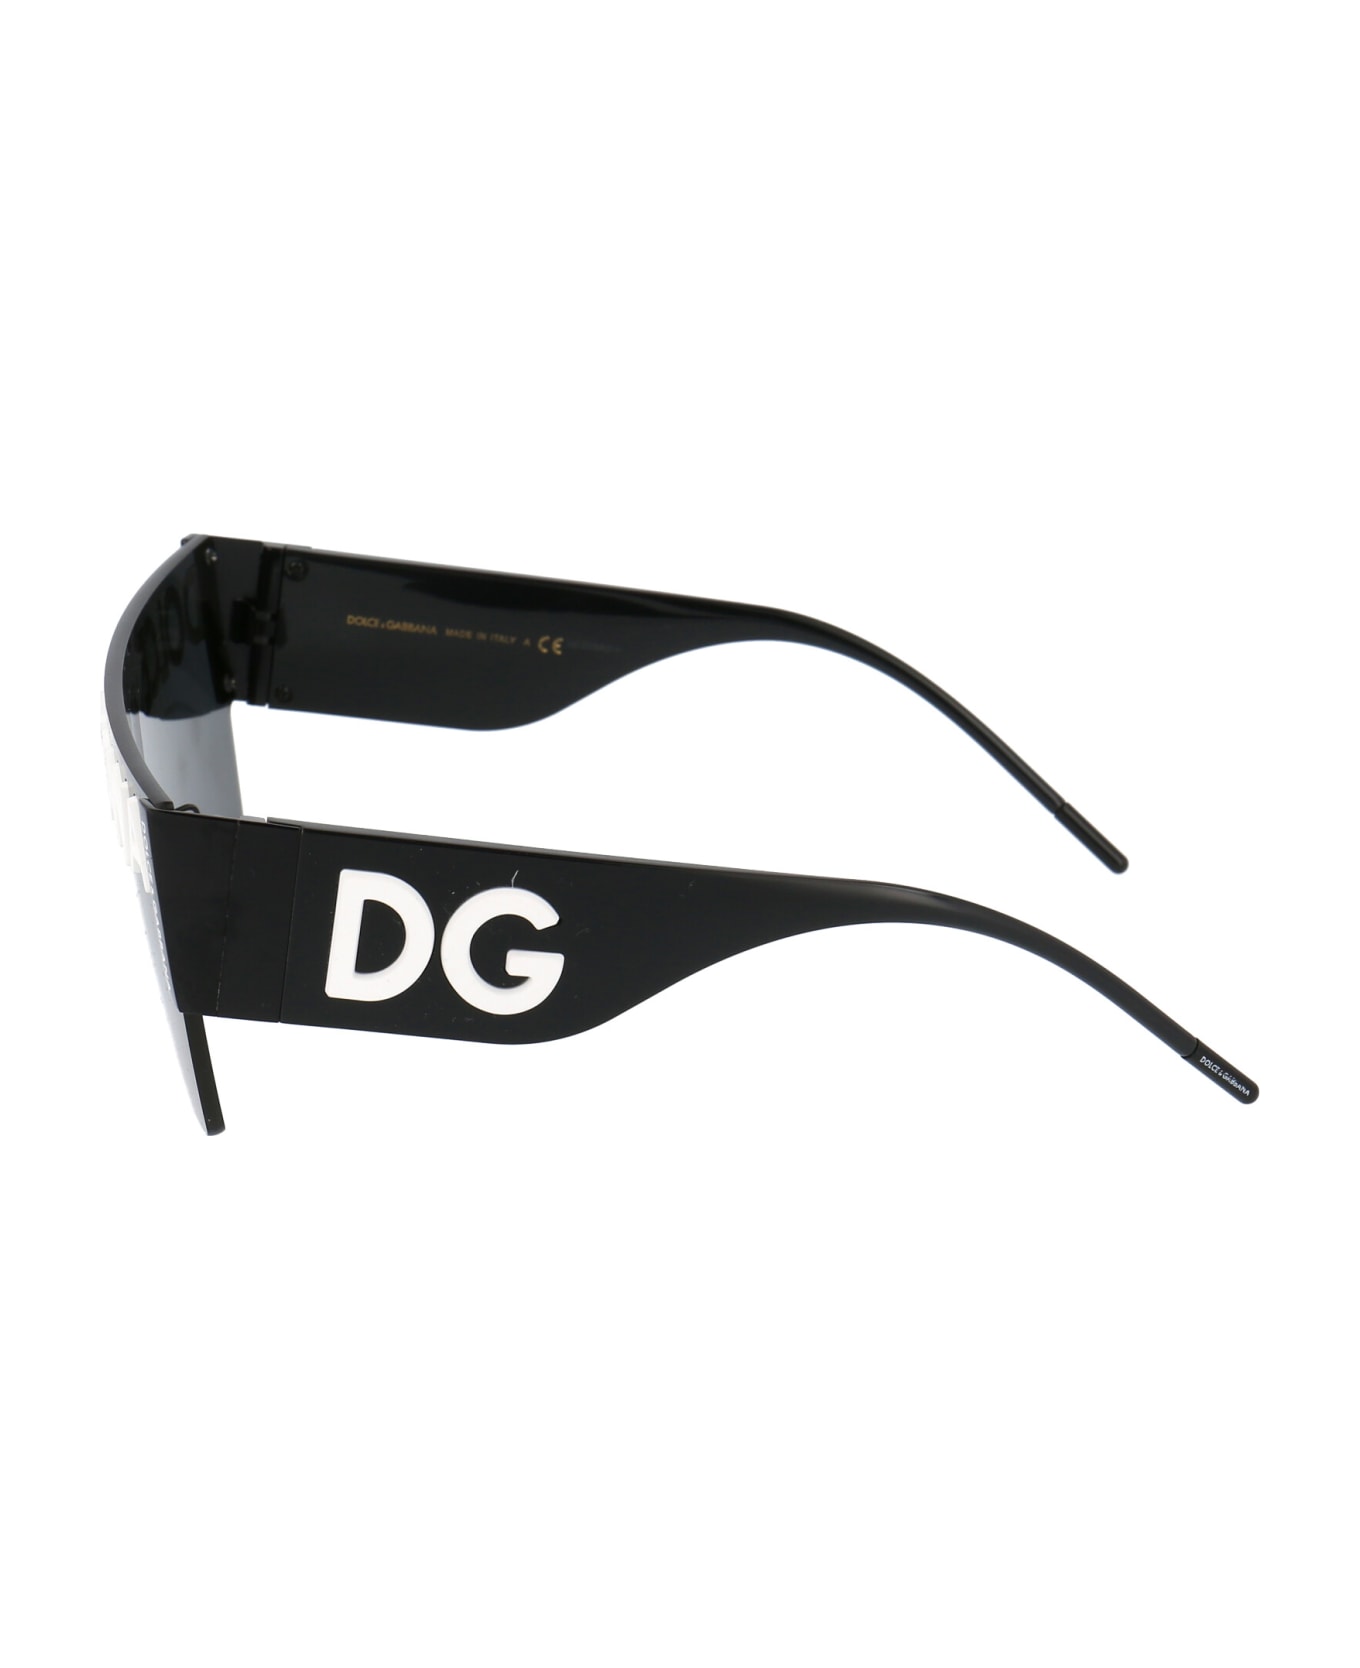 Dolce & Gabbana Eyewear 0dg2233 Sunglasses - 01/87 BLACK サングラス